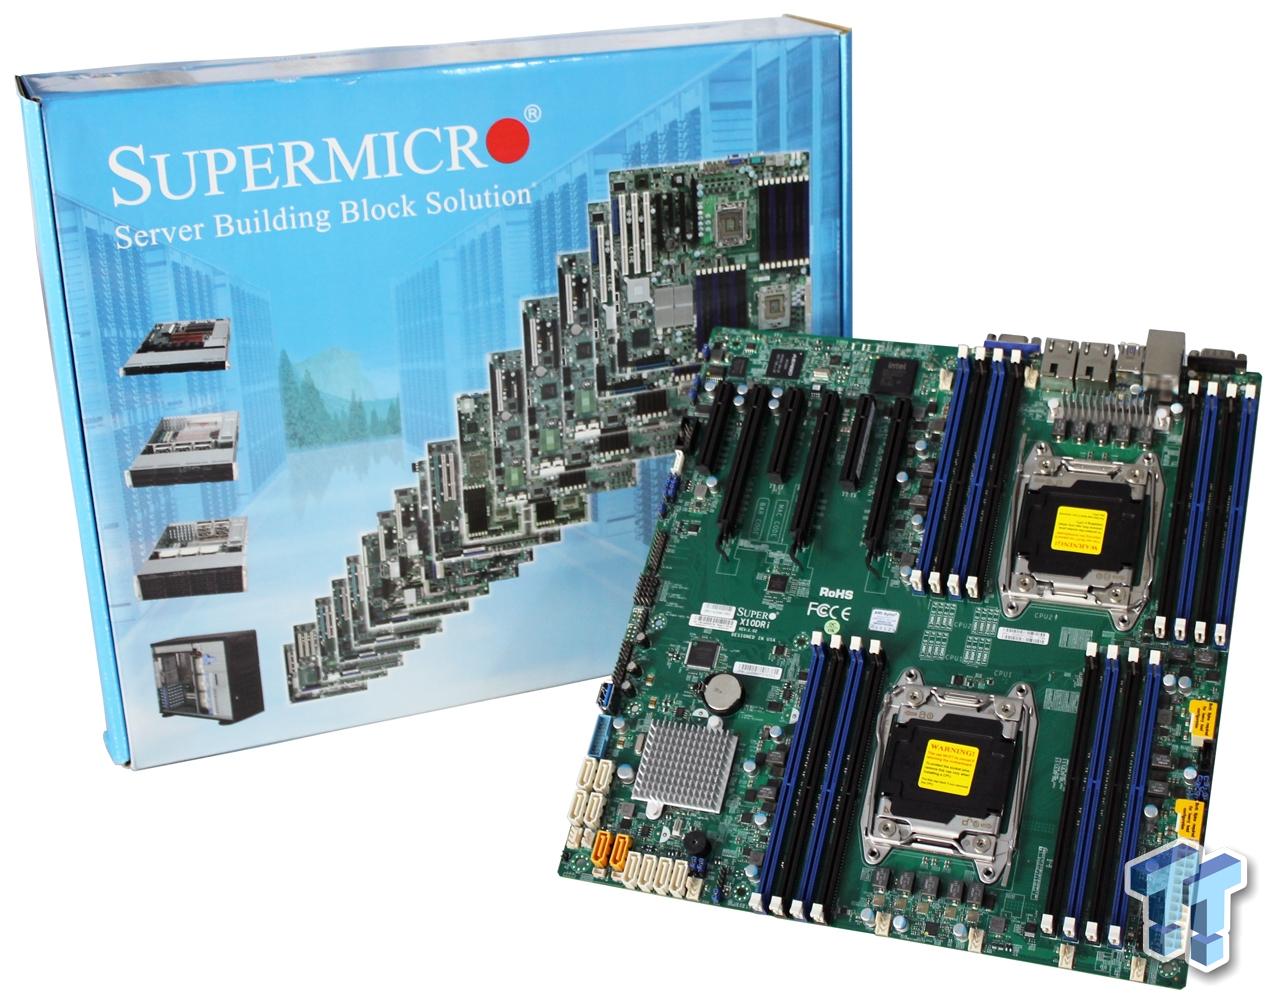 Supermicro X10DRi-T (Intel C612) Server Motherboard Review